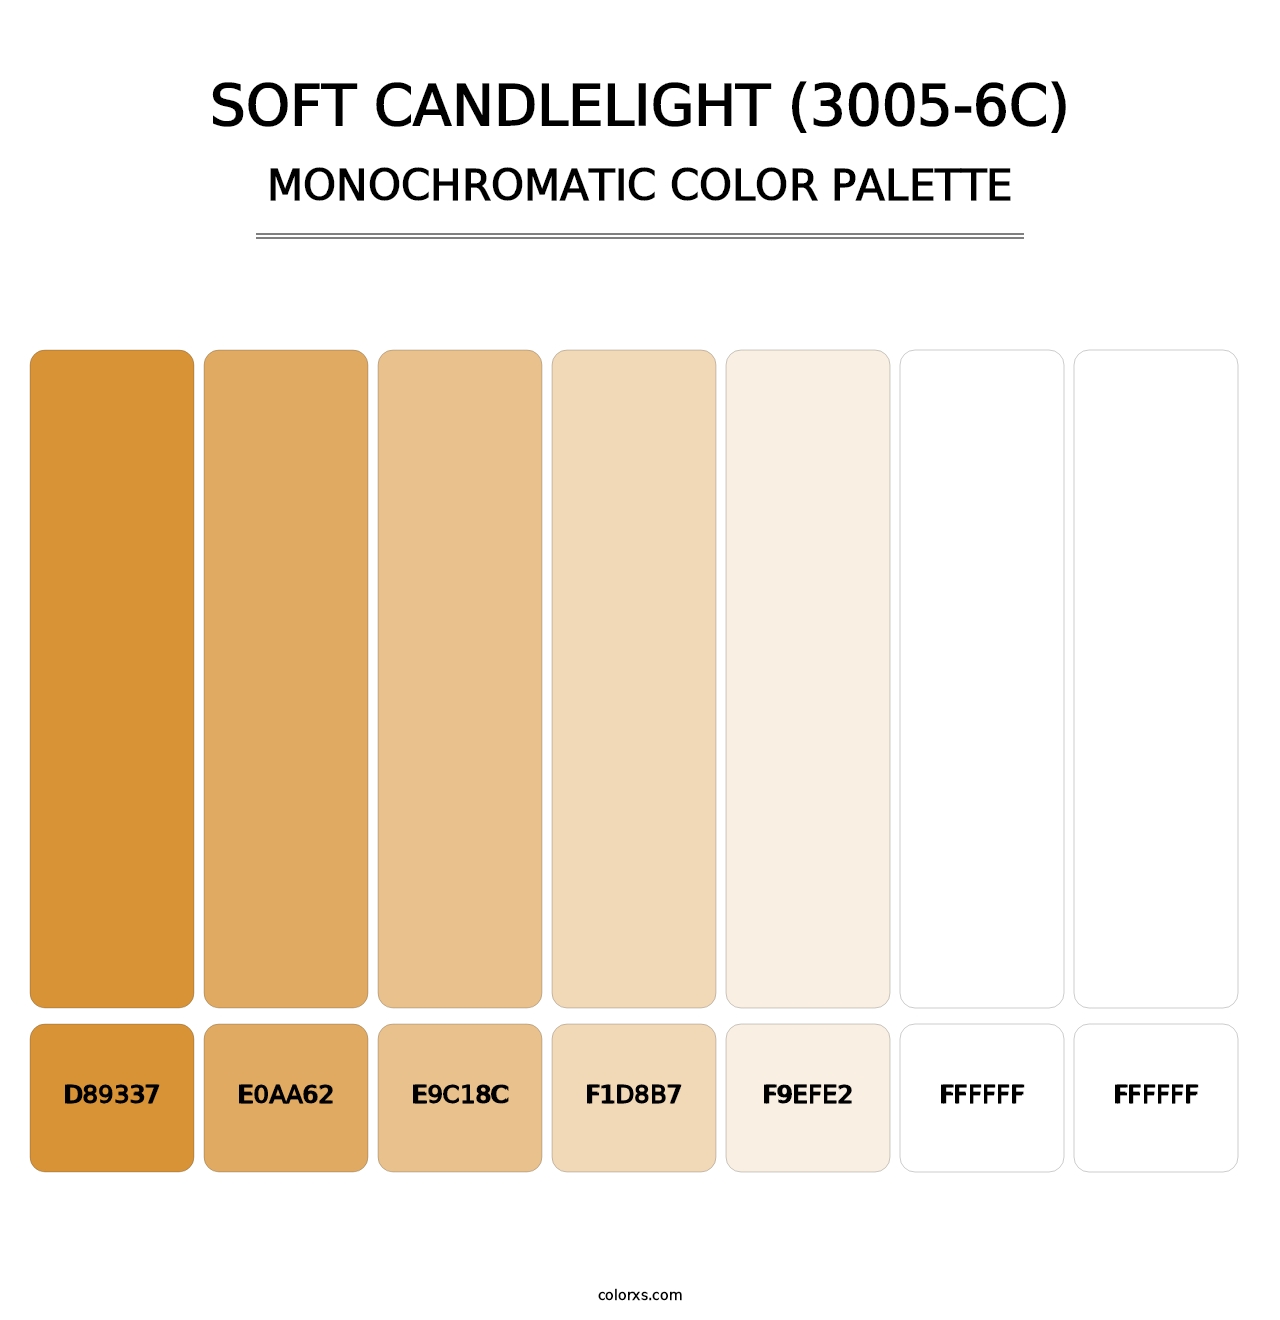 Soft Candlelight (3005-6C) - Monochromatic Color Palette